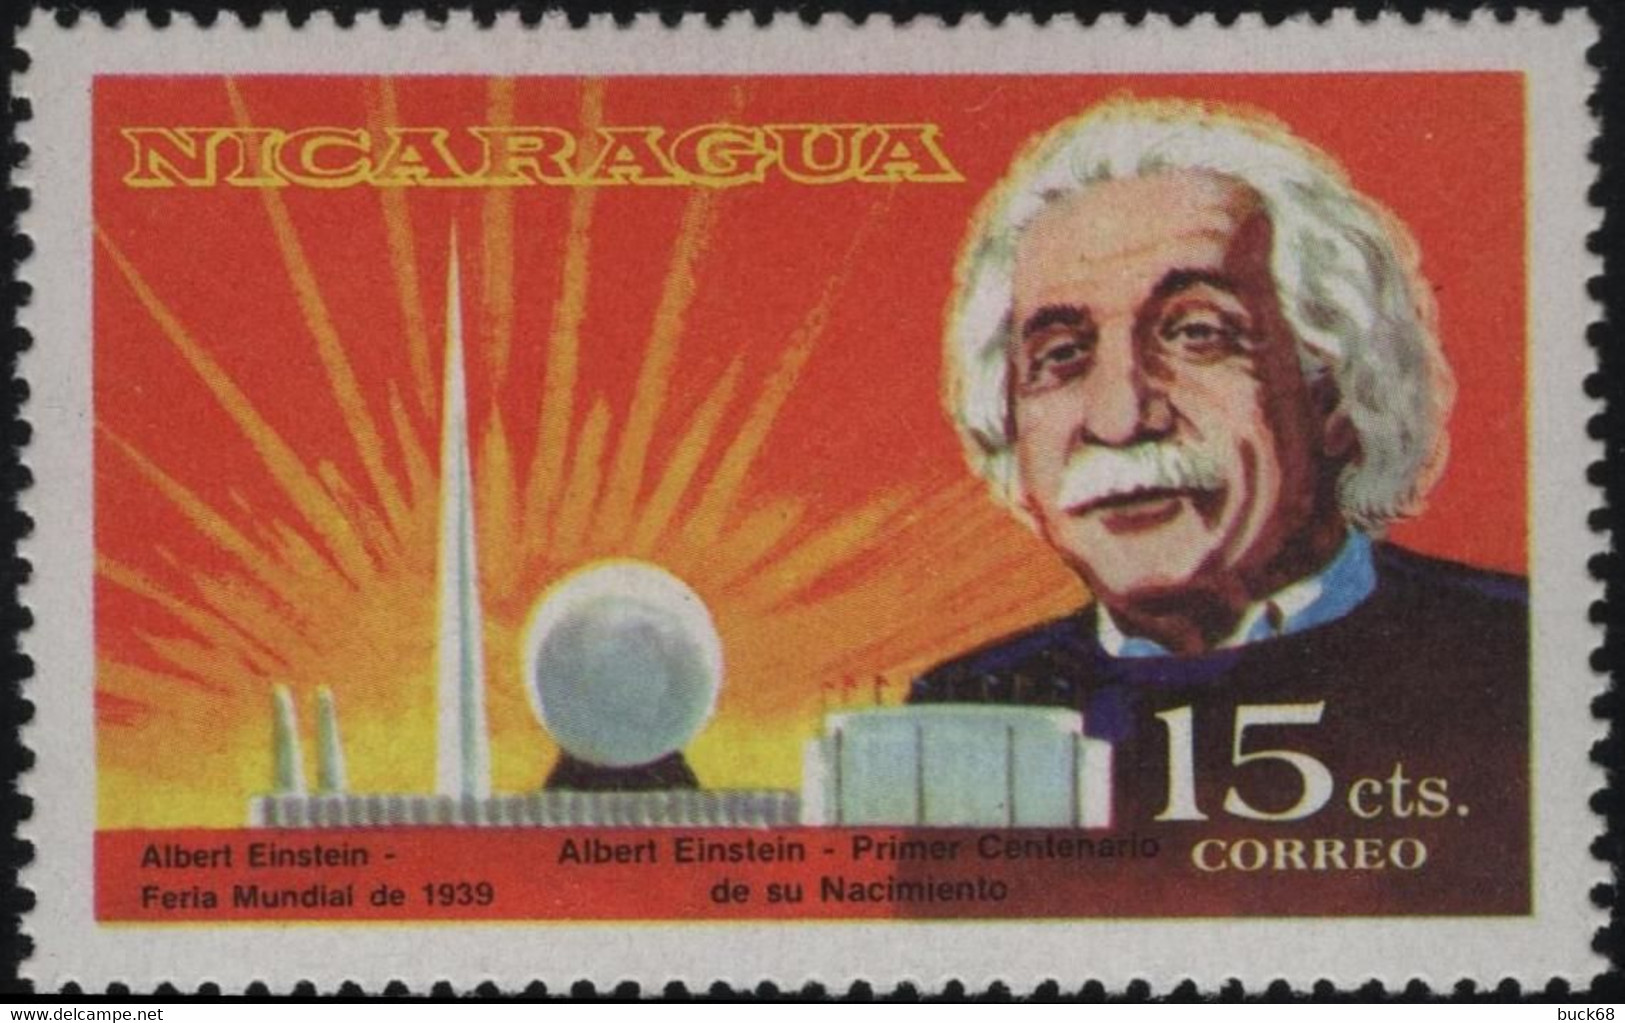 NICARAGUA 1133a ** MNH NOT ISSUED - Non émis Prix Nobel De Physique 1921 Albert EINSTEIN - Rare - Collector - Albert Einstein